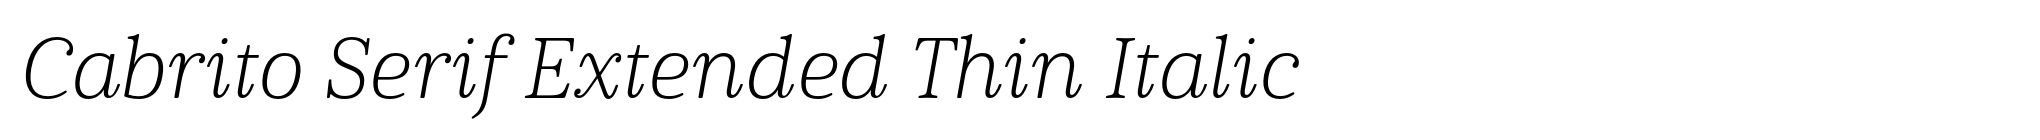 Cabrito Serif Extended Thin Italic image